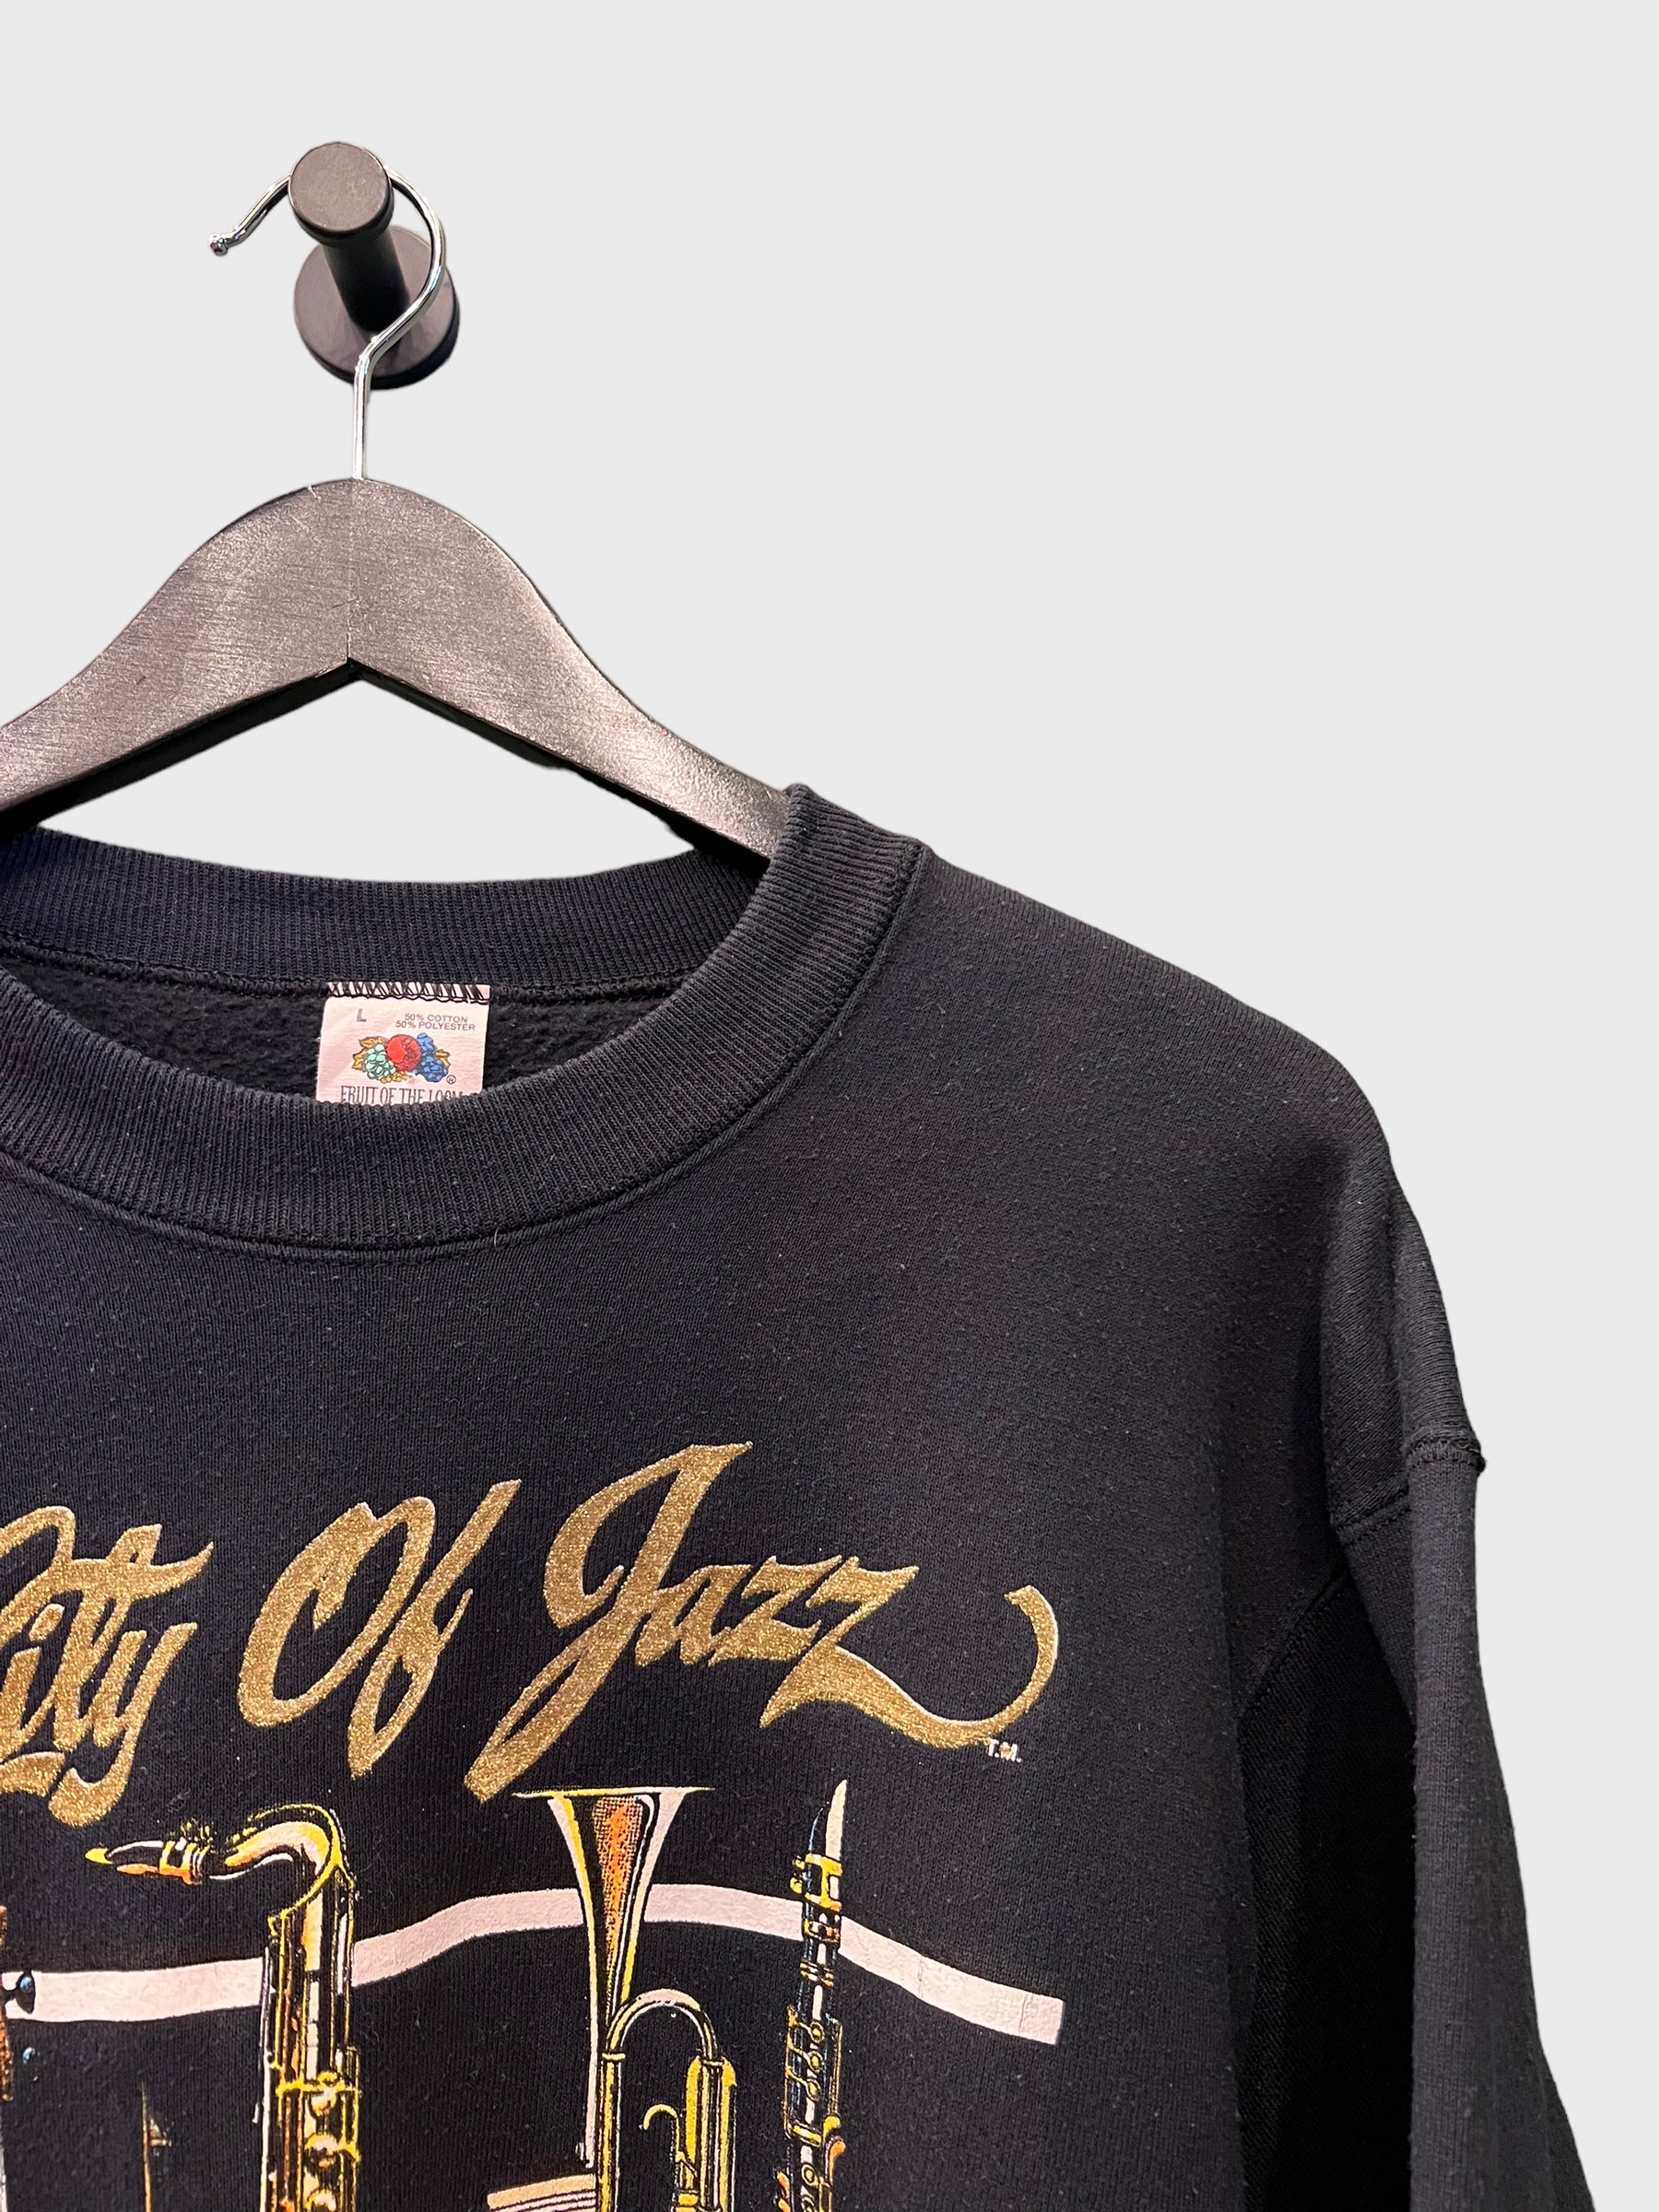 City of Jazz New Orleans sweatshirt